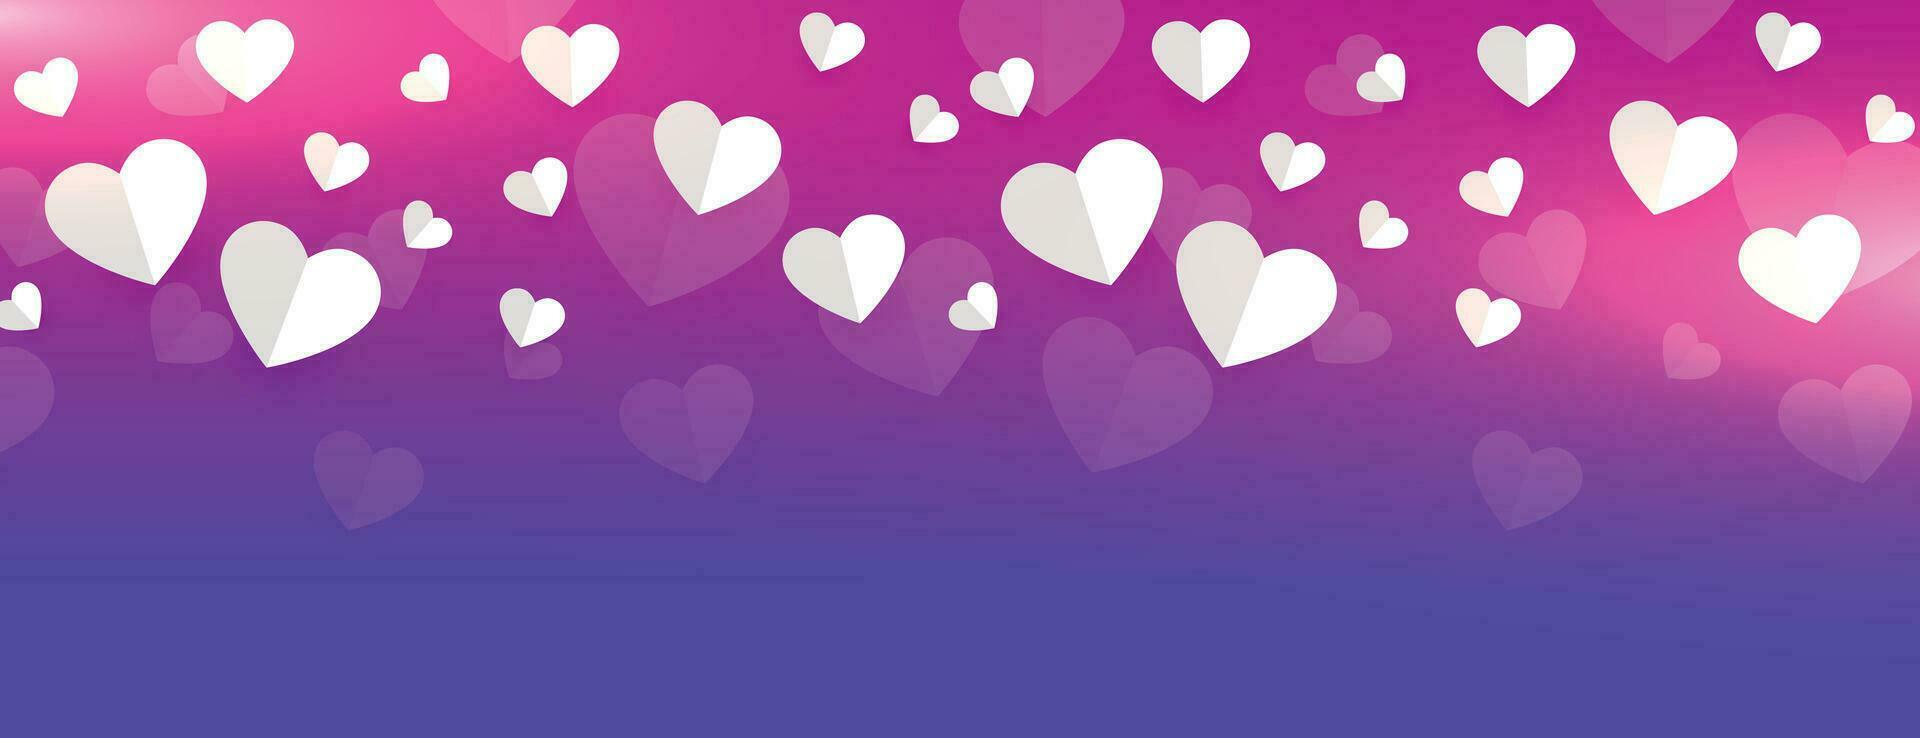 romantic paper hearts beautiful banner design vector